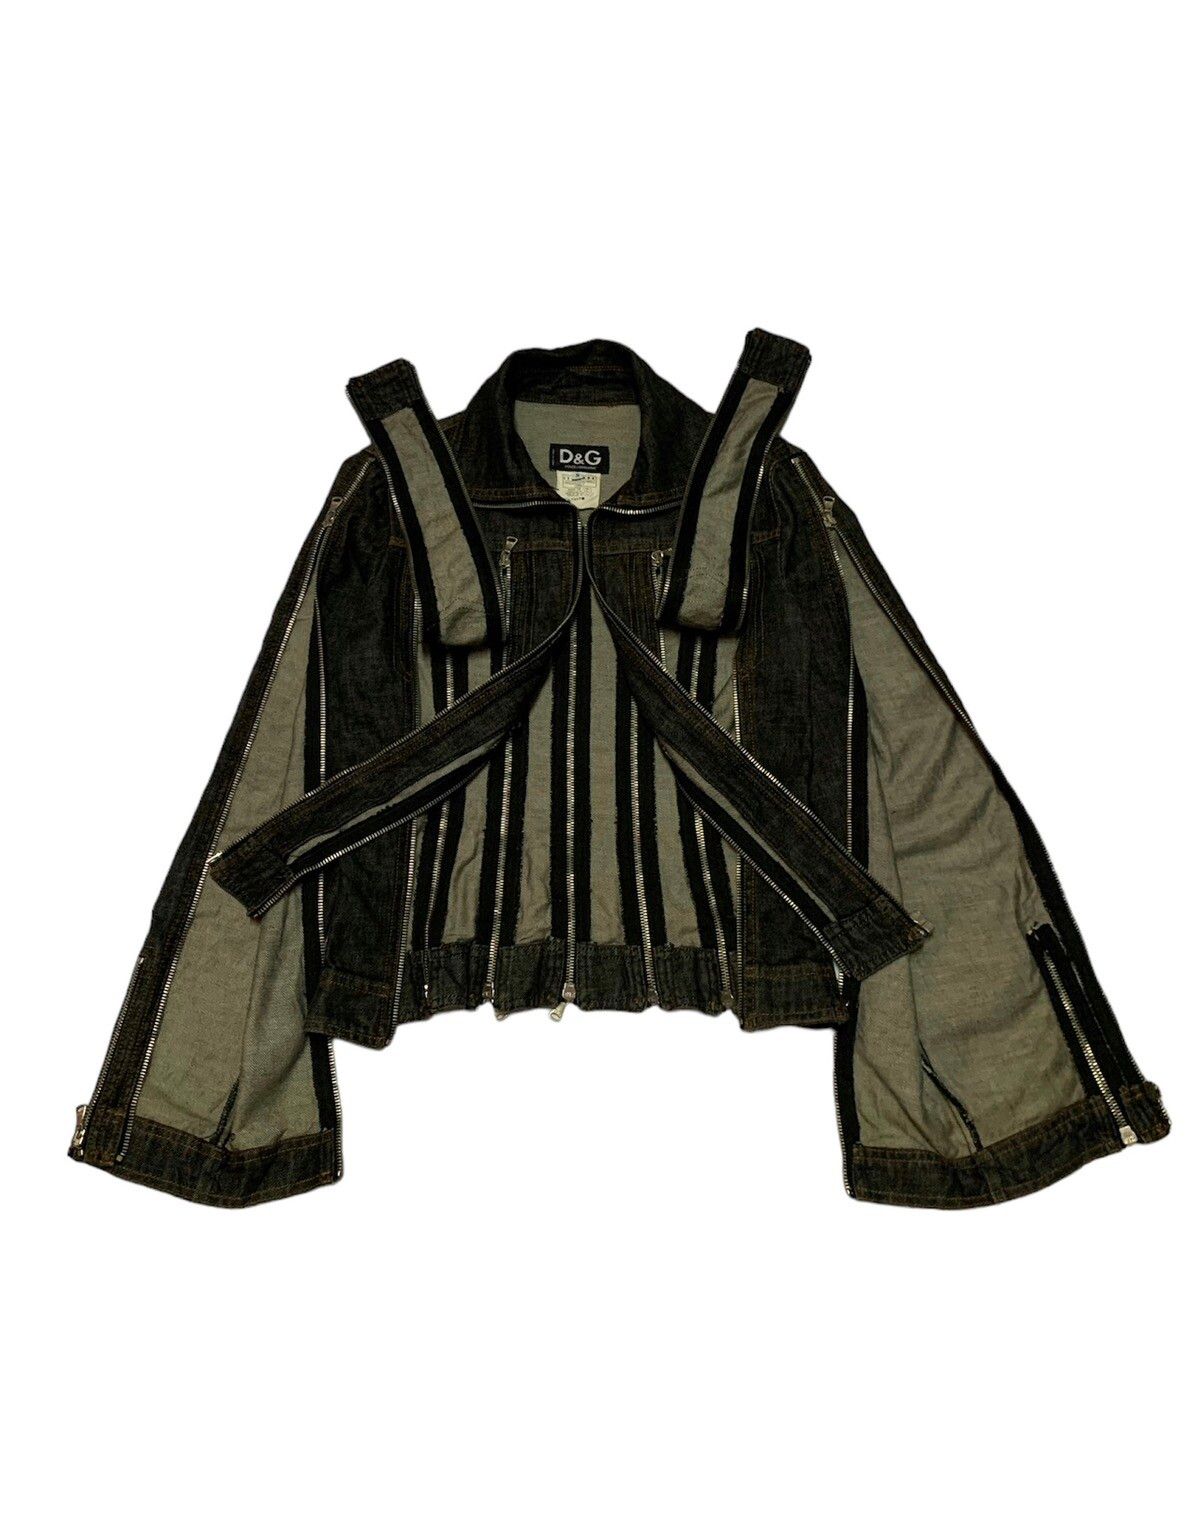 Rare D&G Dolce Gabbana Zipper 2004 Shredder Denim Jacket - 1